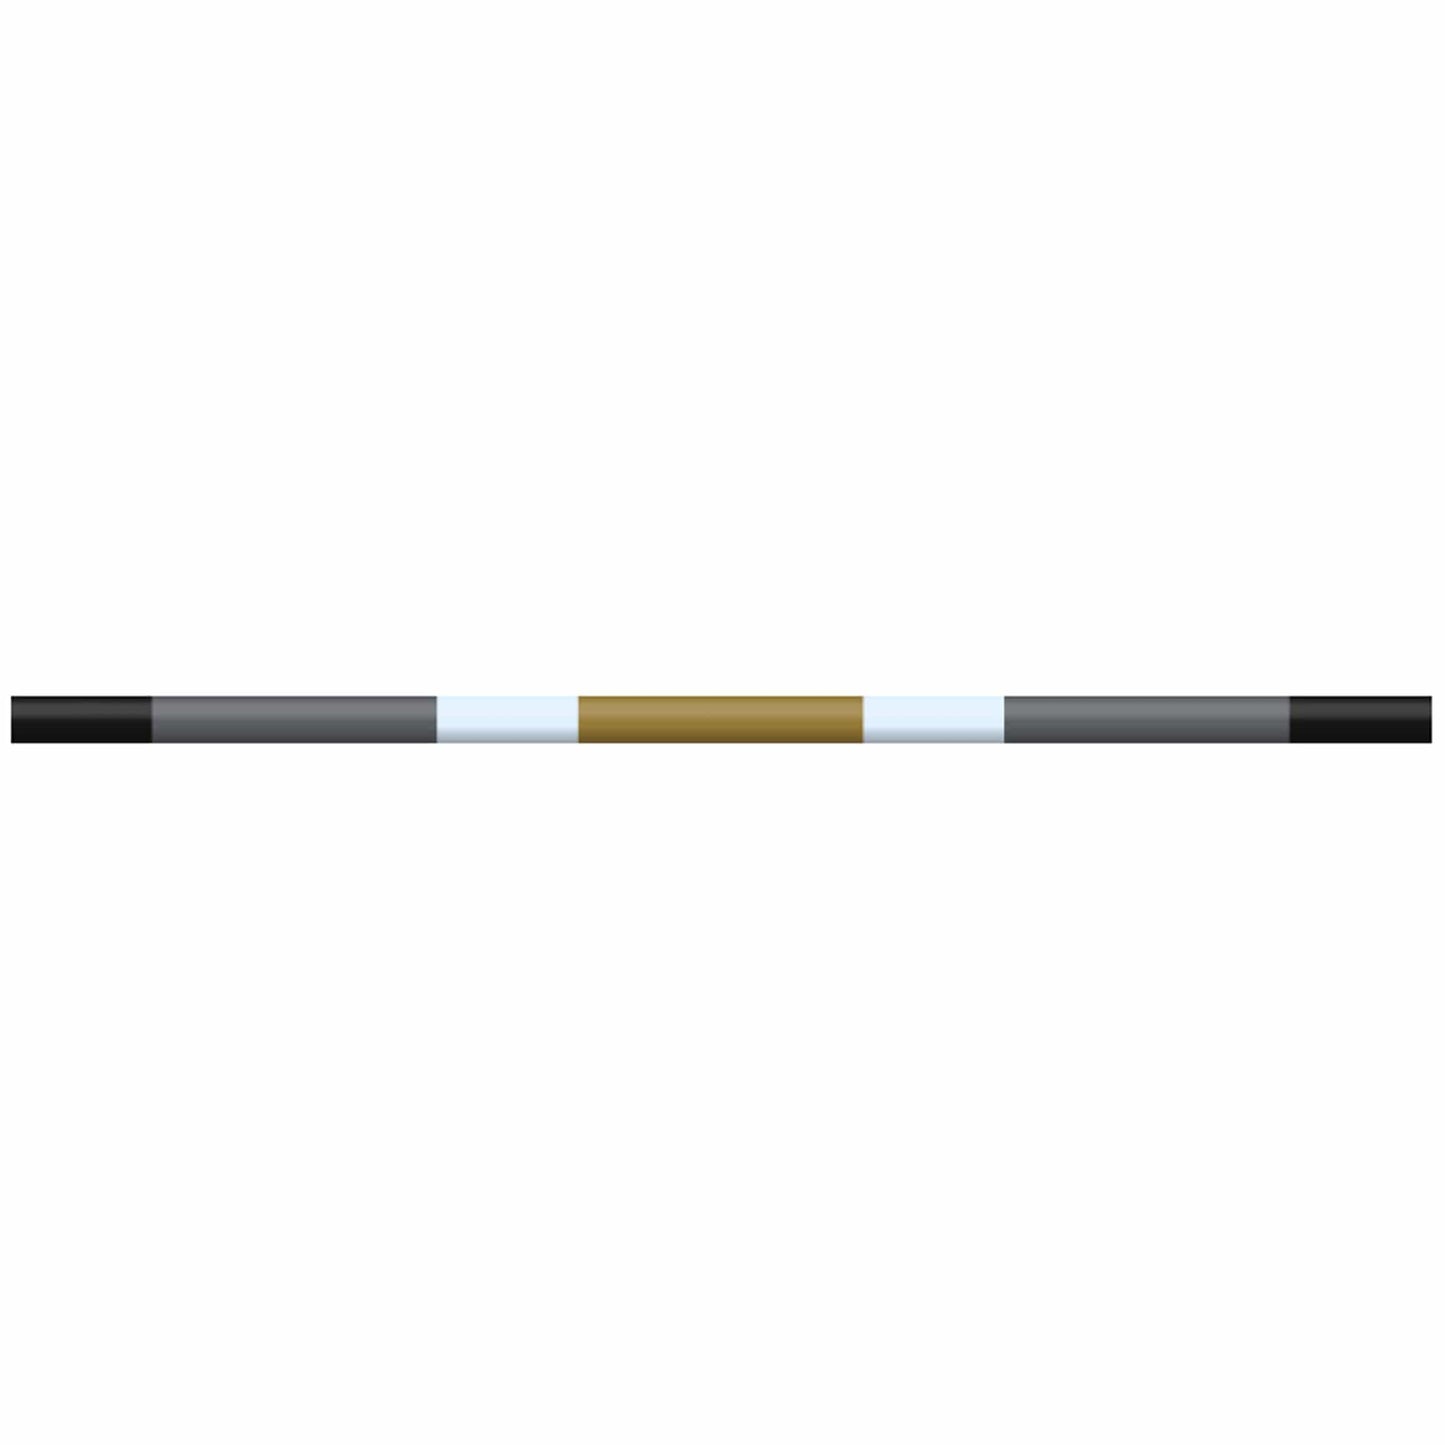 Copper Pony Poles Black / Silver / White + Gold Pole - 10' ft Zero Maintenance (Polymer Wrapped Wood)